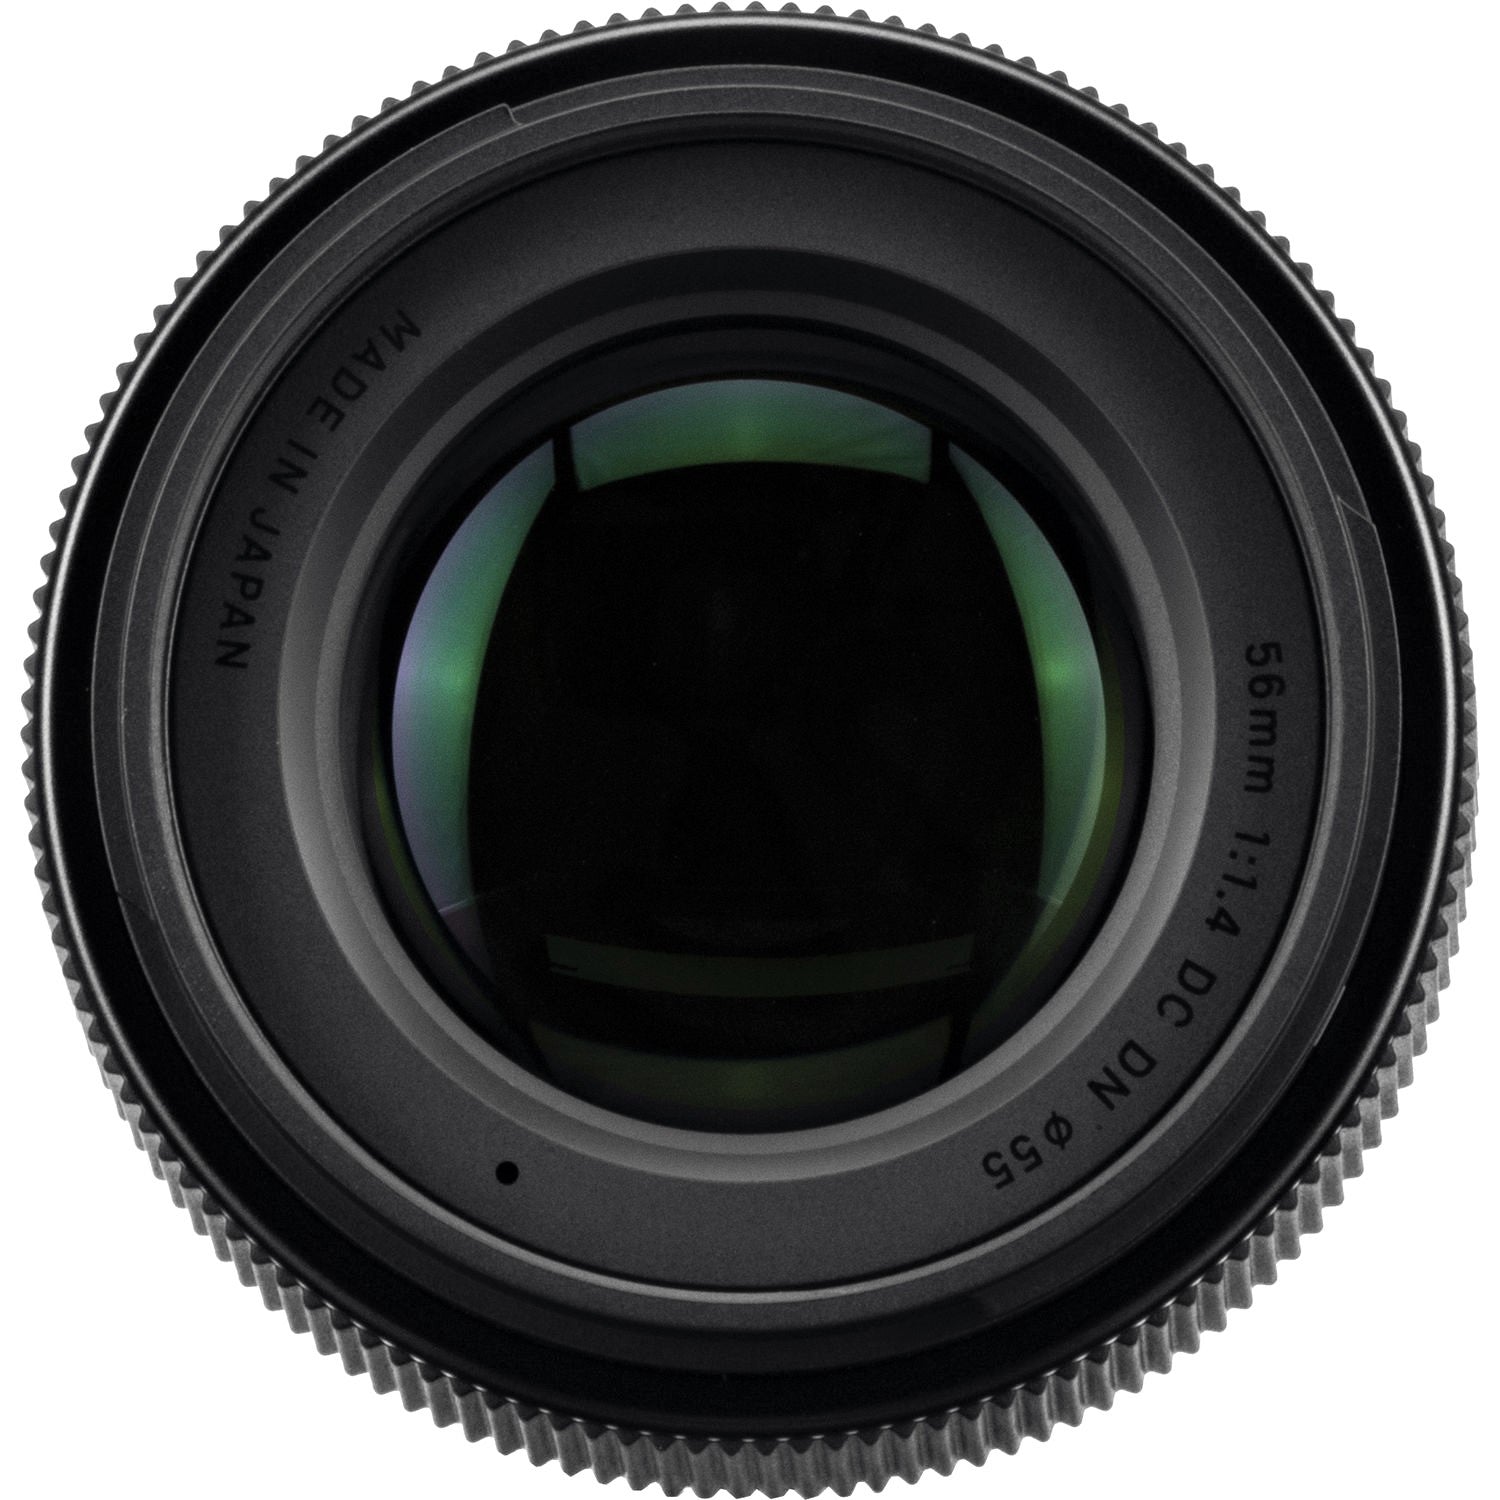 Sigma 56mm F1.4 DC DN Contemporary Lens